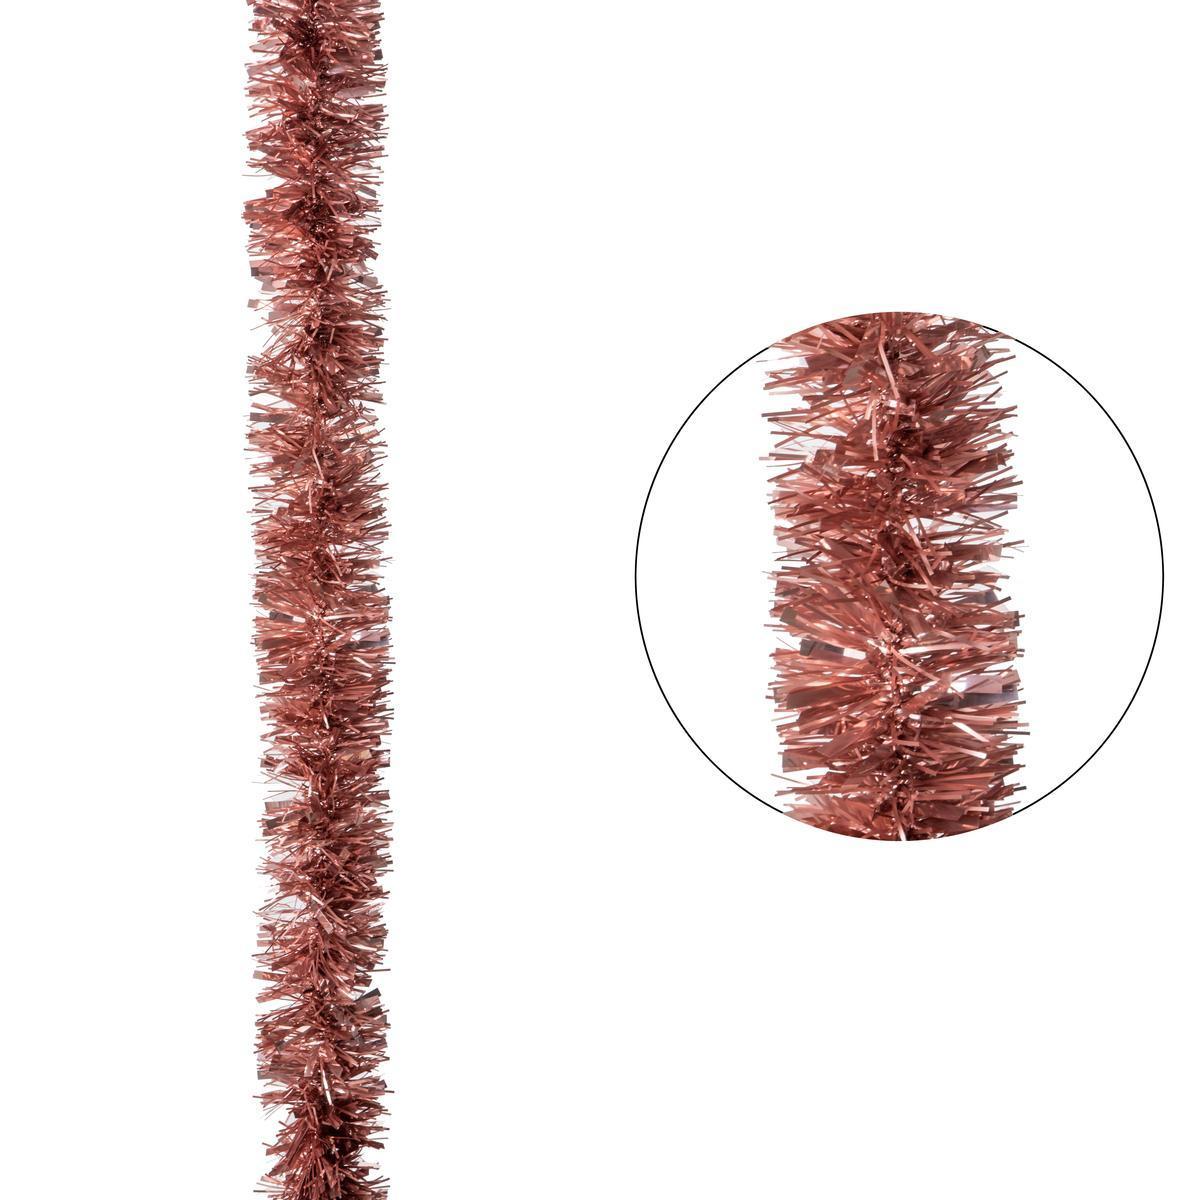 Guirlande scintillante - L 2 m x 10 cm x 6 brins - Rose, rouge